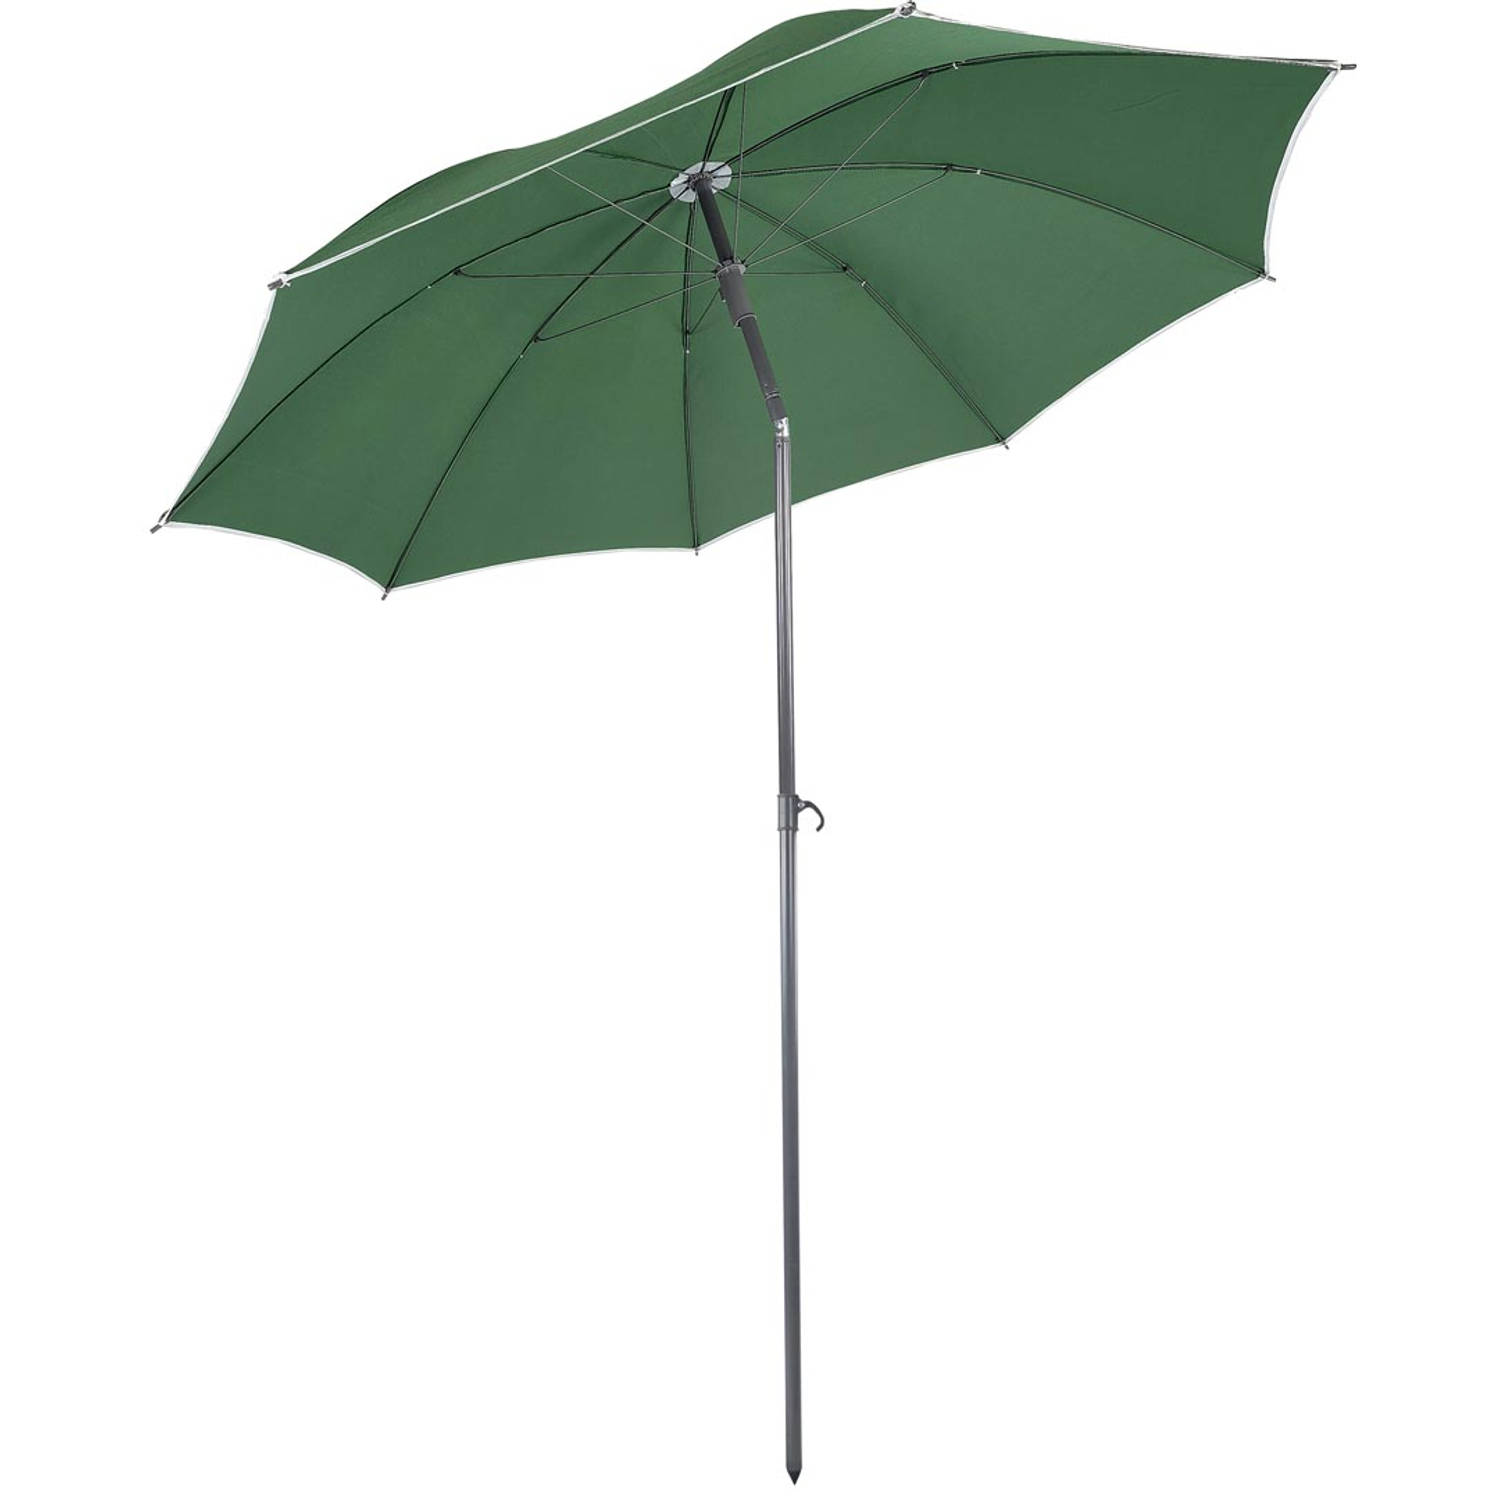 Strand parasol S Ø160cm groen.